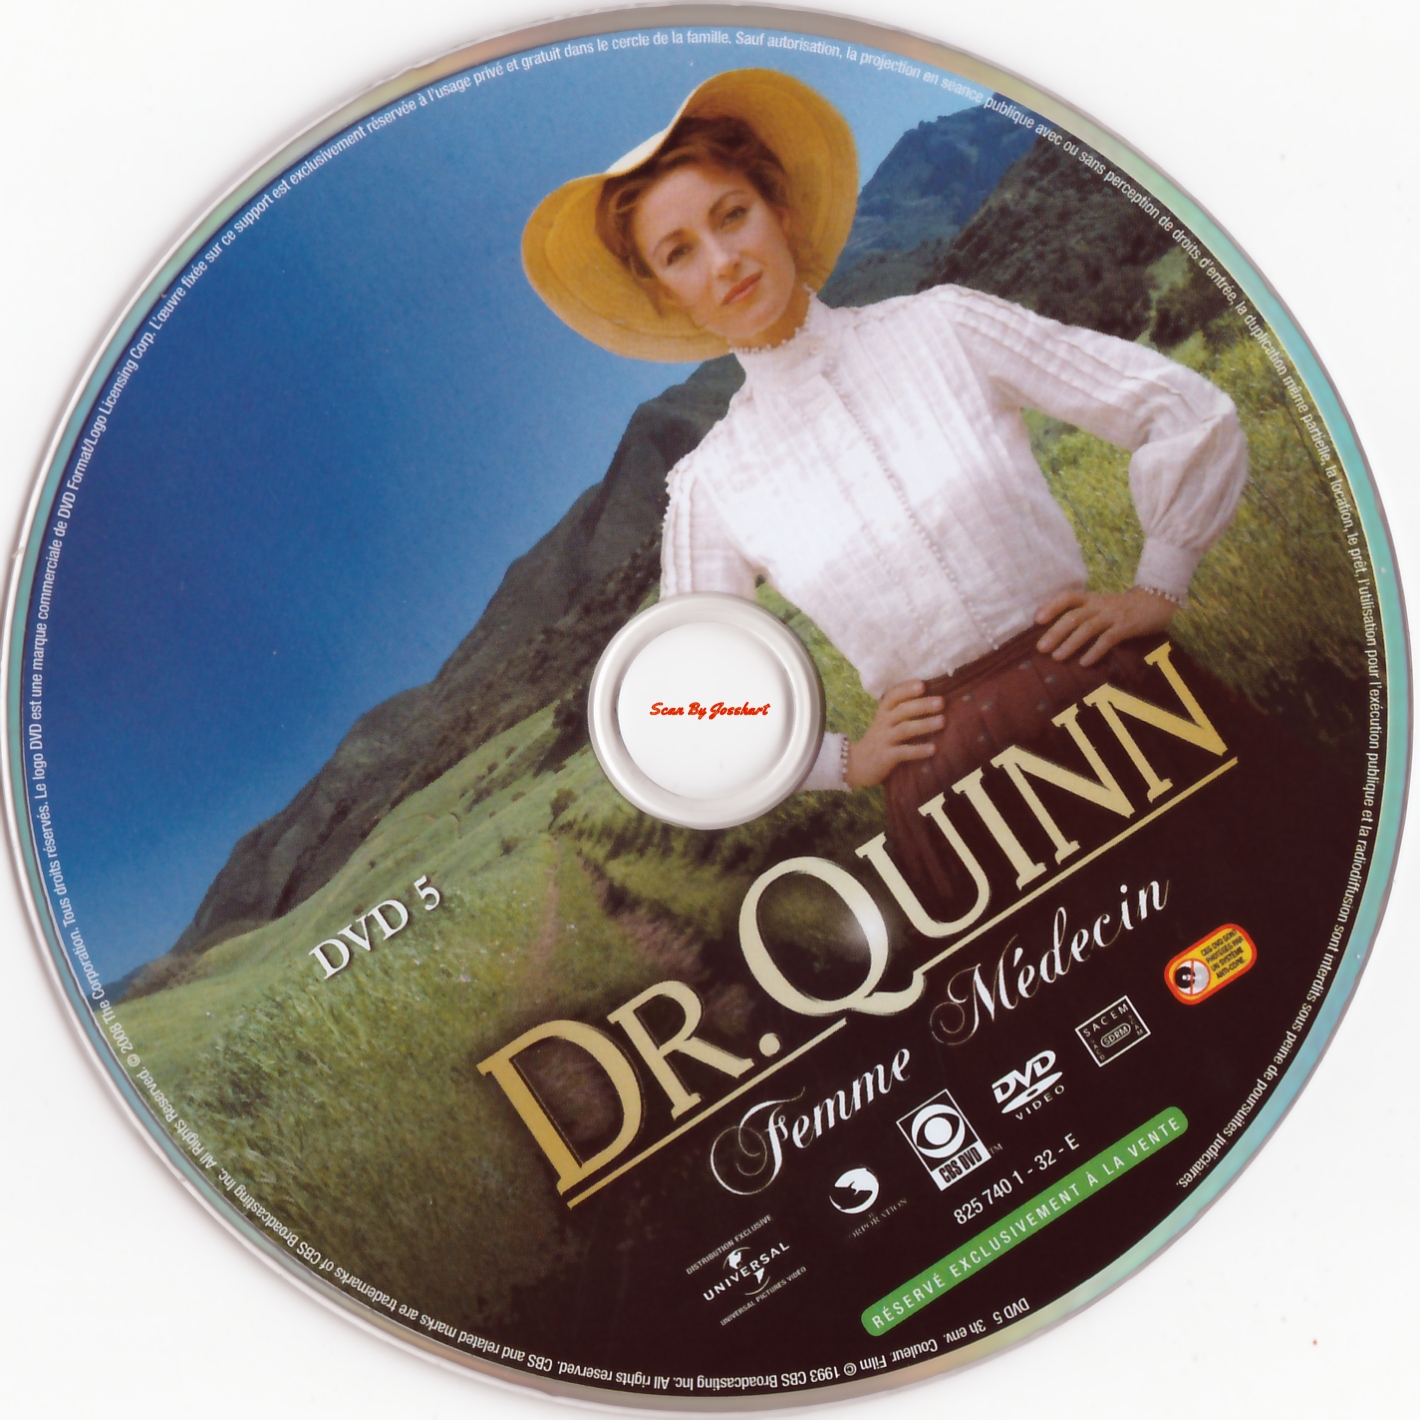 Docteur Quinn femme mdecin - Integrale Saison 1 DISC 5